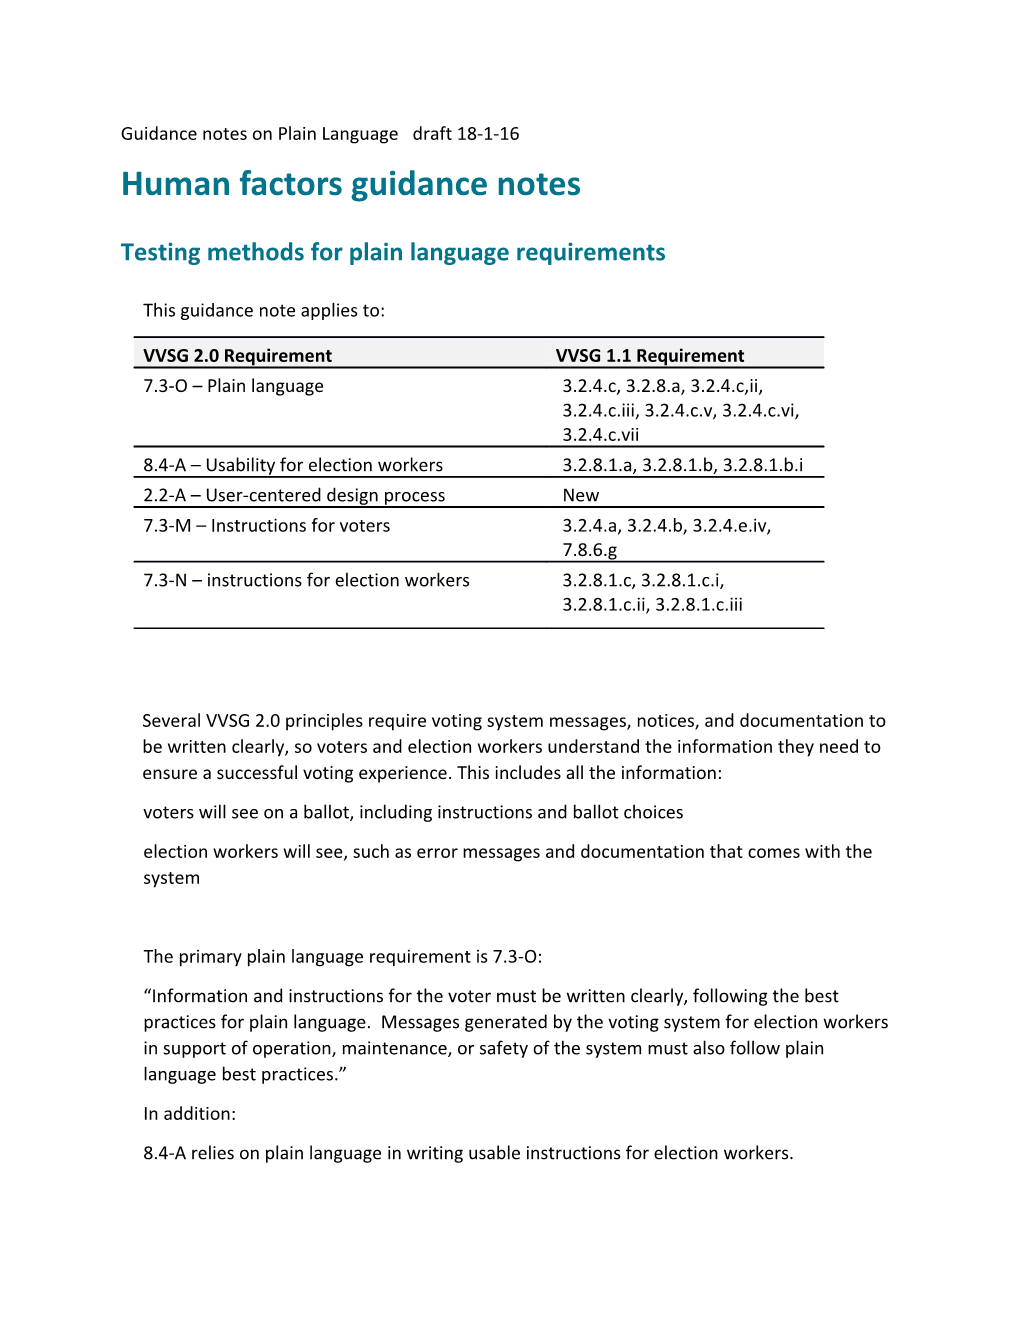 Guidance Notes on Plain Language Draft 18-1-16